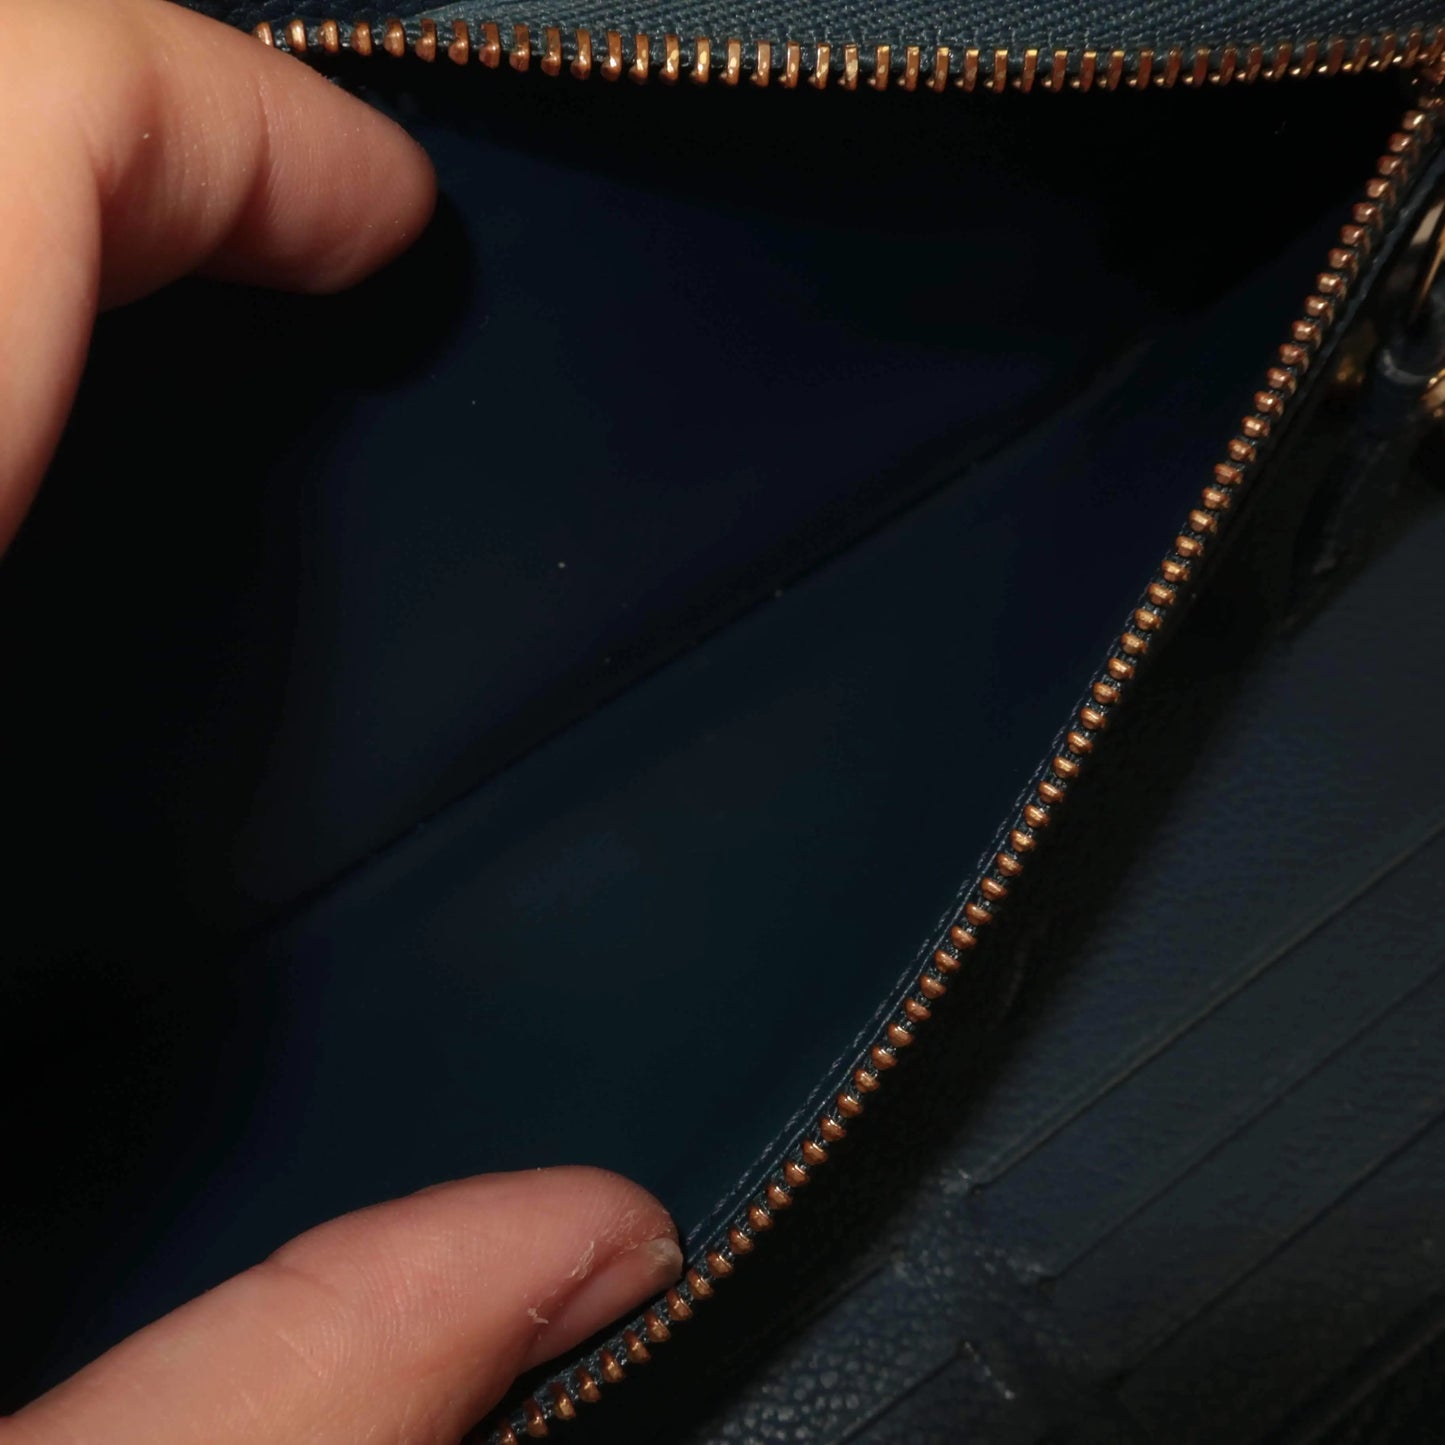 Louis Vuitton Louis Vuitton Zippy Empreinte wallet LVBagaholic